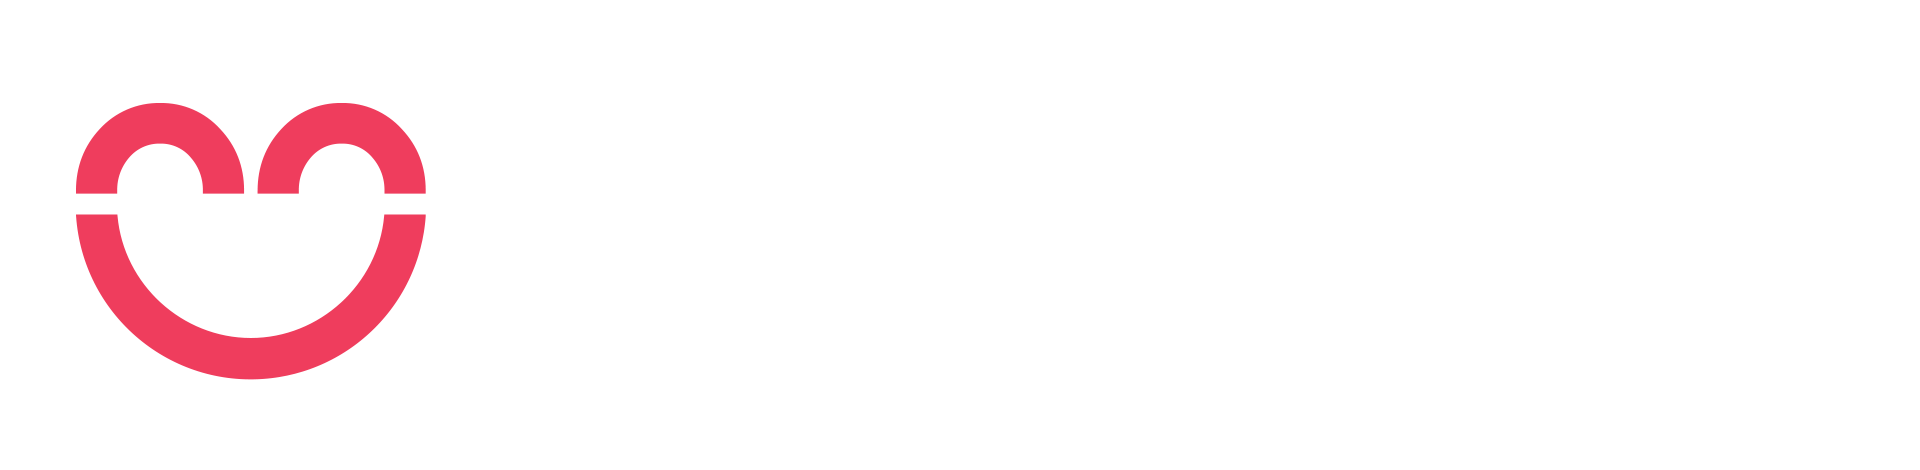 Balloon.gr-Logo_Negative